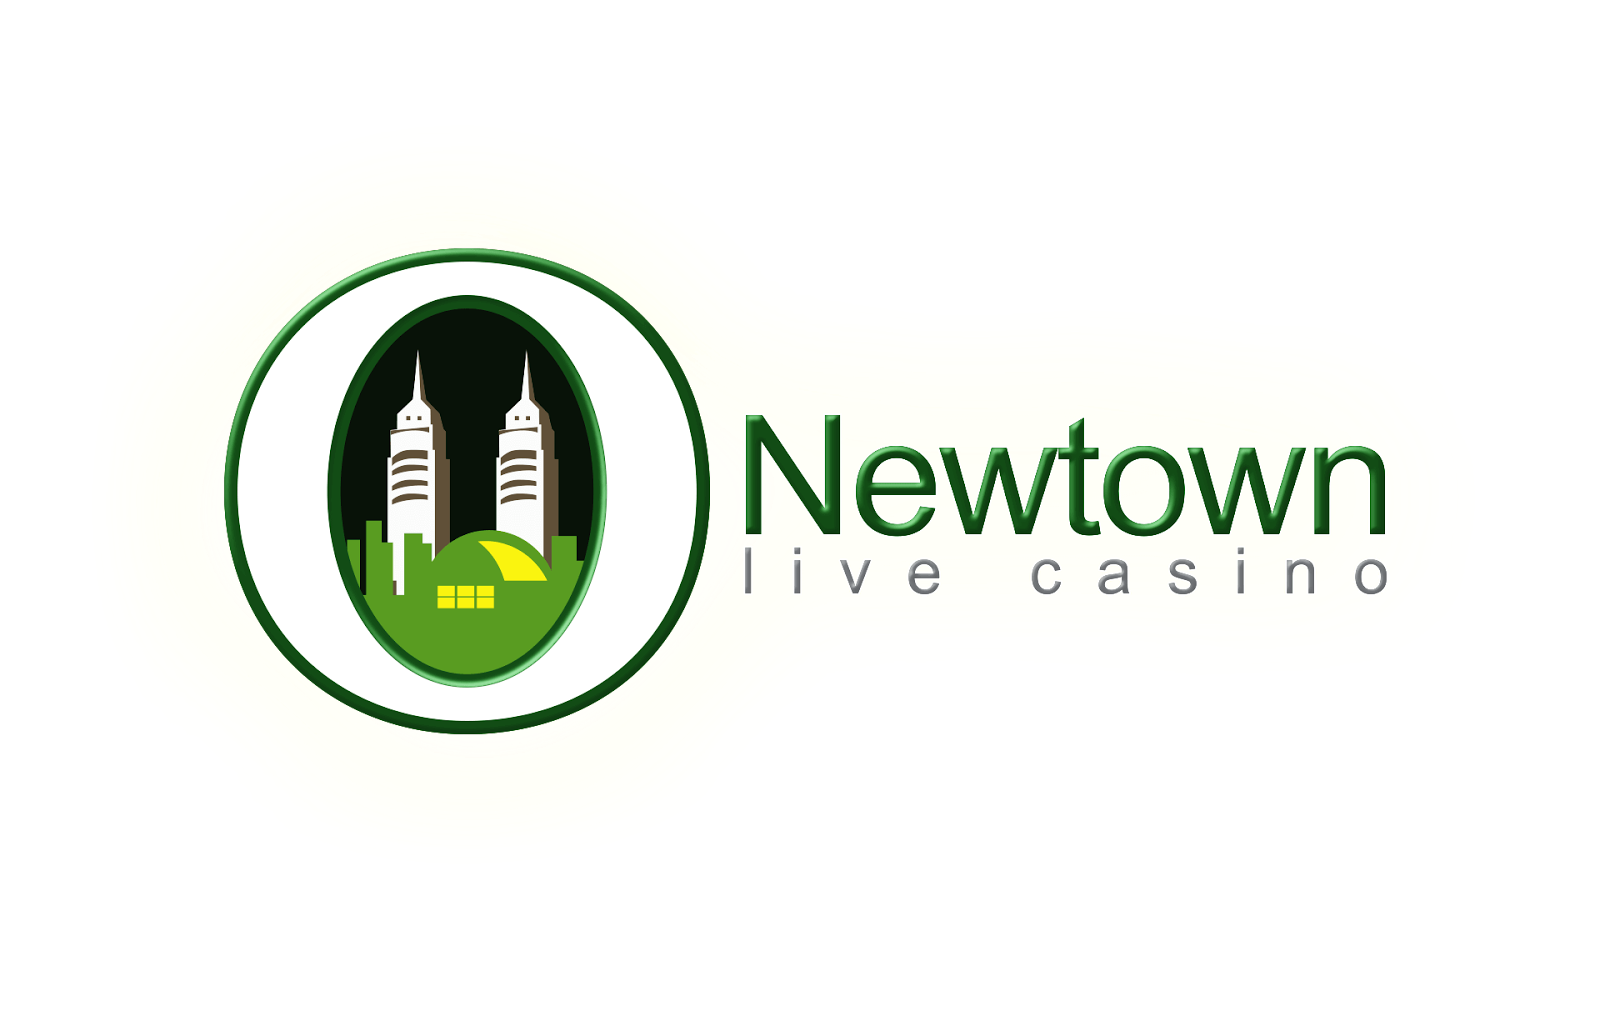 Newtown Online Casino Review